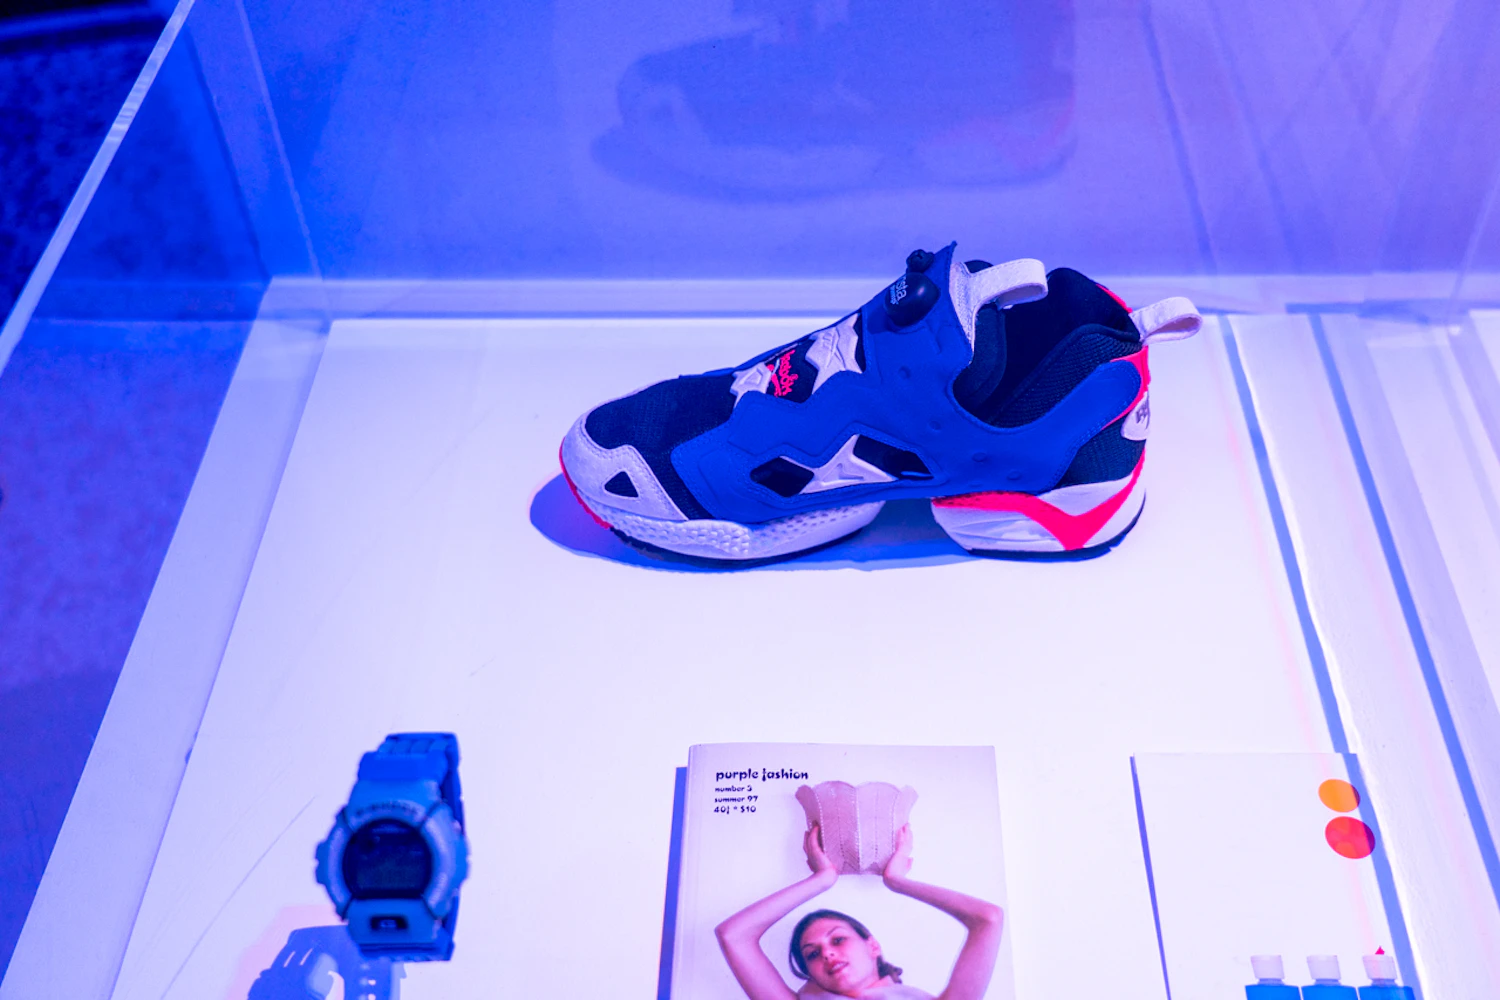 High-tech sneakers (Instapump Fury) now enter the museum era